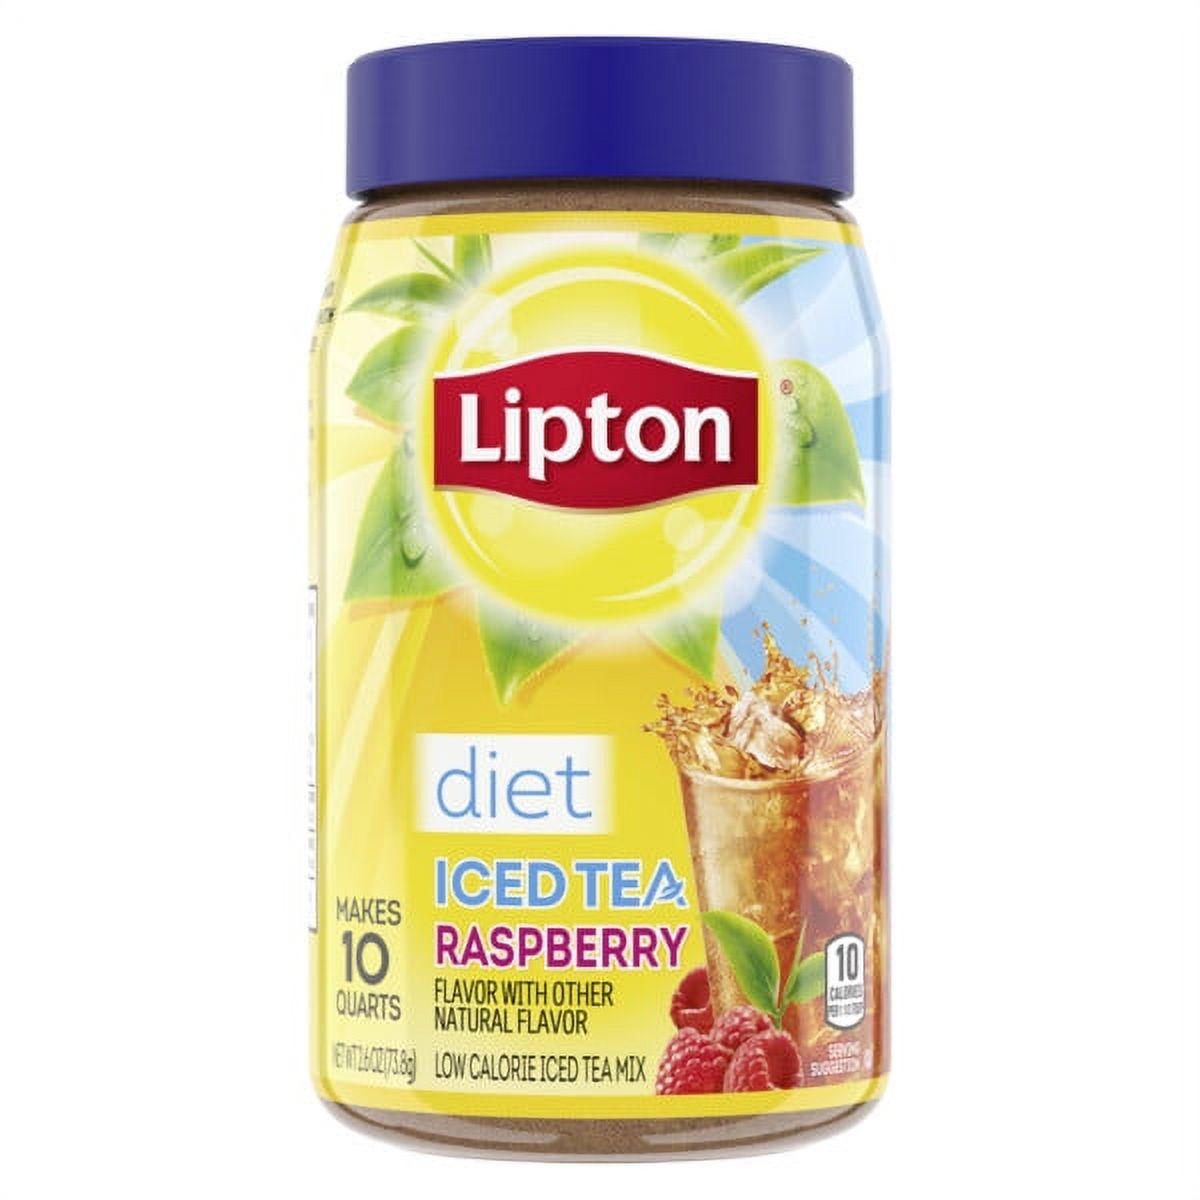 Lipton Iced Tea Mix, Black Tea, Raspberry, Caffeinated, Sugar-Free, Makes 10 Quarts - image 1 of 10